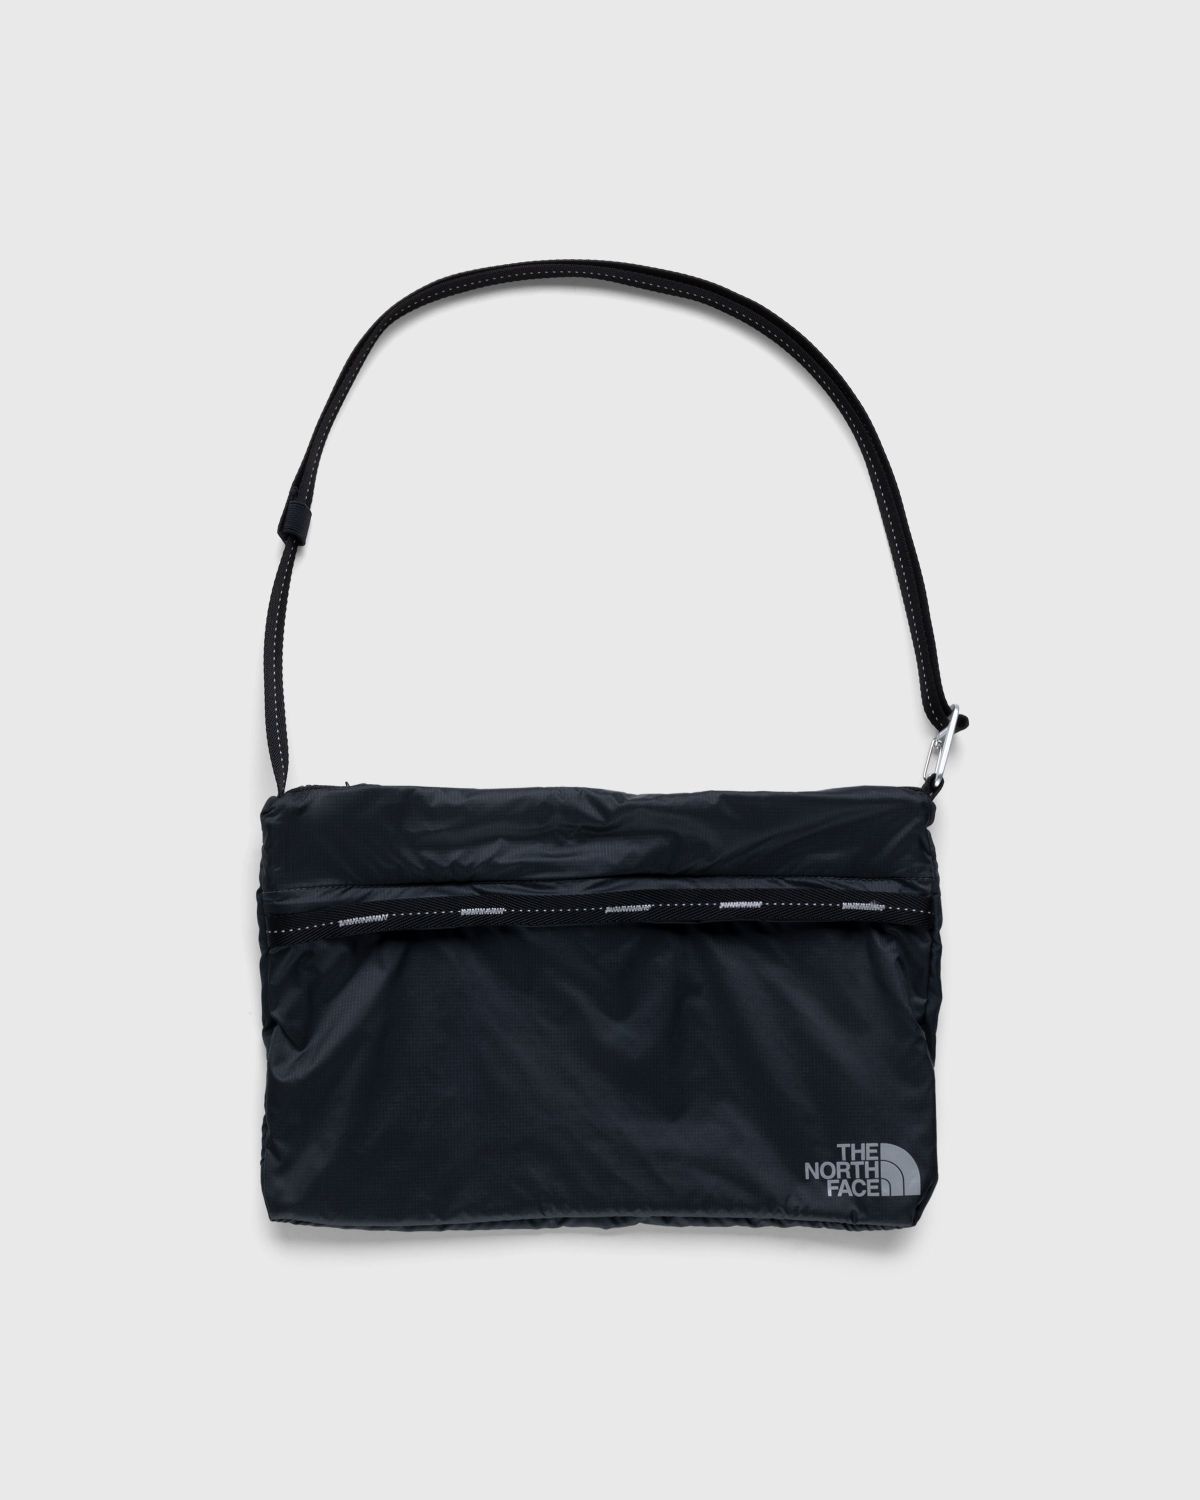 park Beweegt niet Komkommer The North Face – Flyweight Shoulder Bag Grey/Black | Highsnobiety Shop